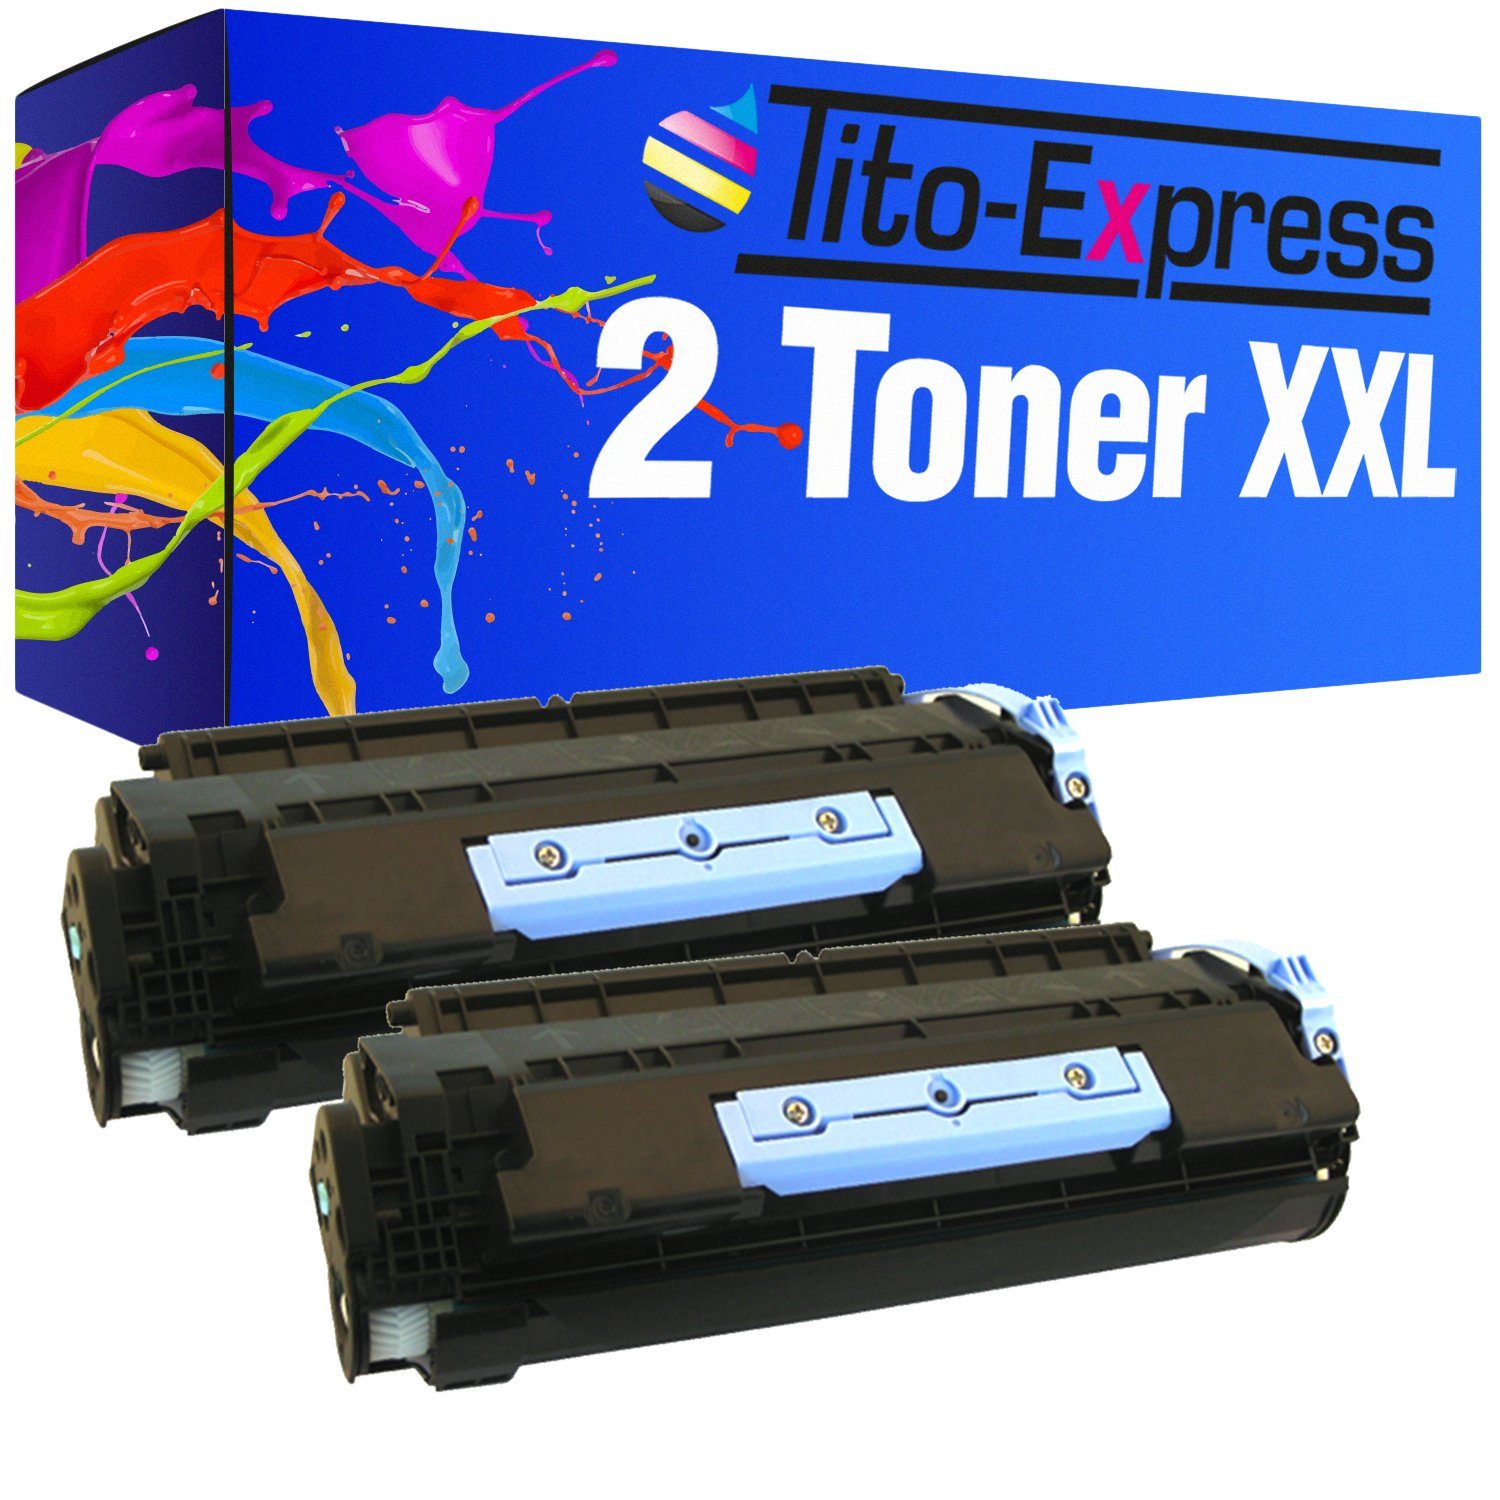 I-Sensys Set Series für Tonerpatrone MF220 Black, MF230 2er MF229 Tito-Express MF211 MF231 CanonCRG737 737 CRG-737 ersetzt Canon CRG MF210 MF232 I-Sensys